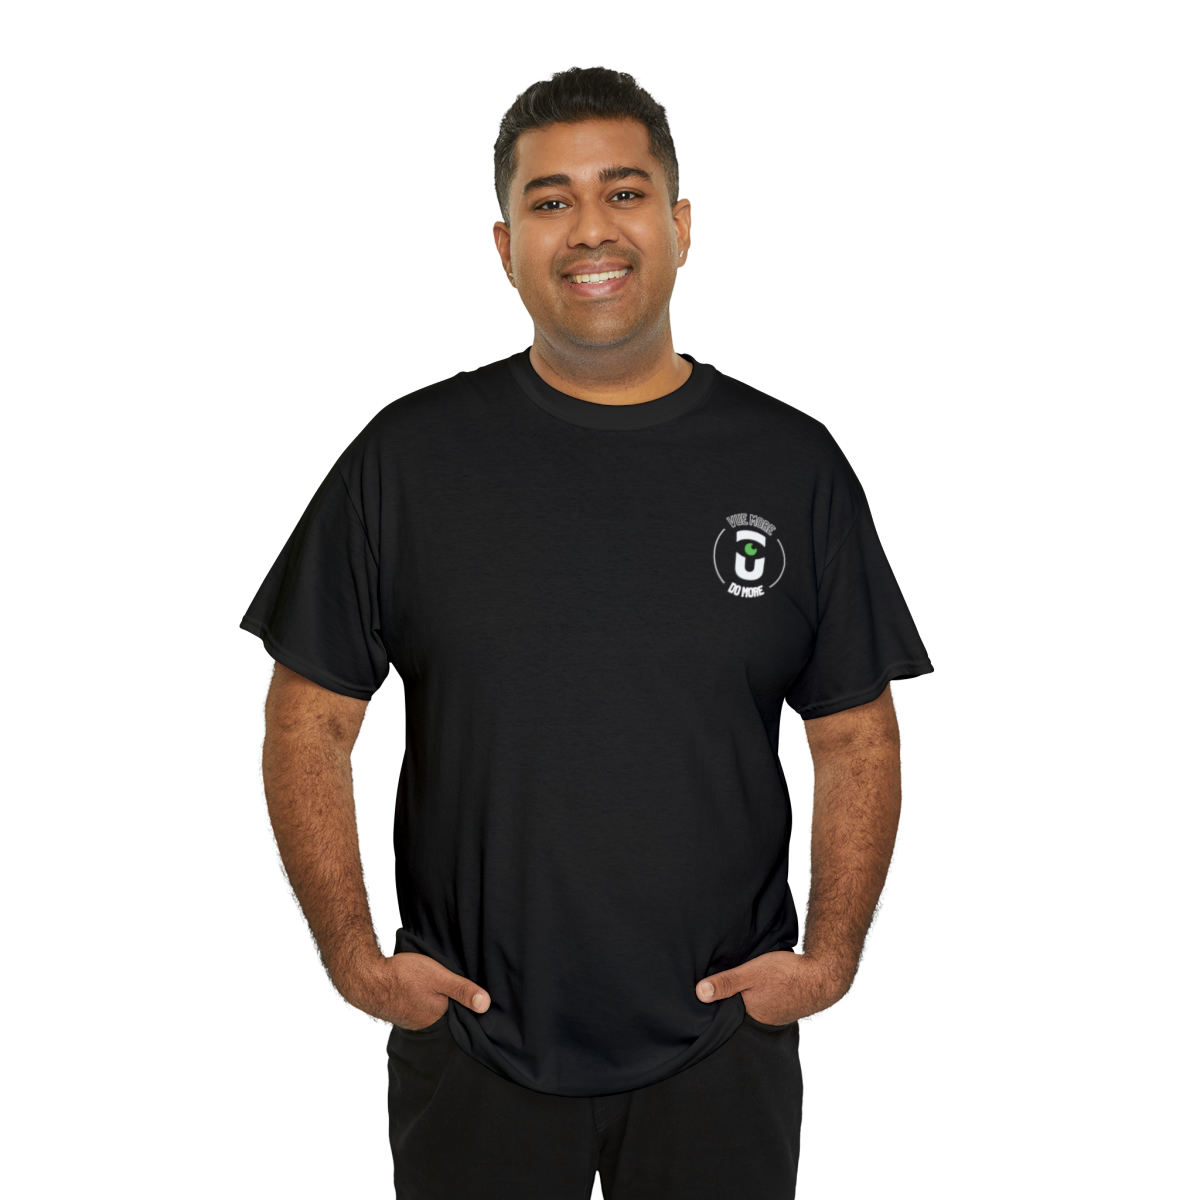 iVueit Graphic Black T-Shirt